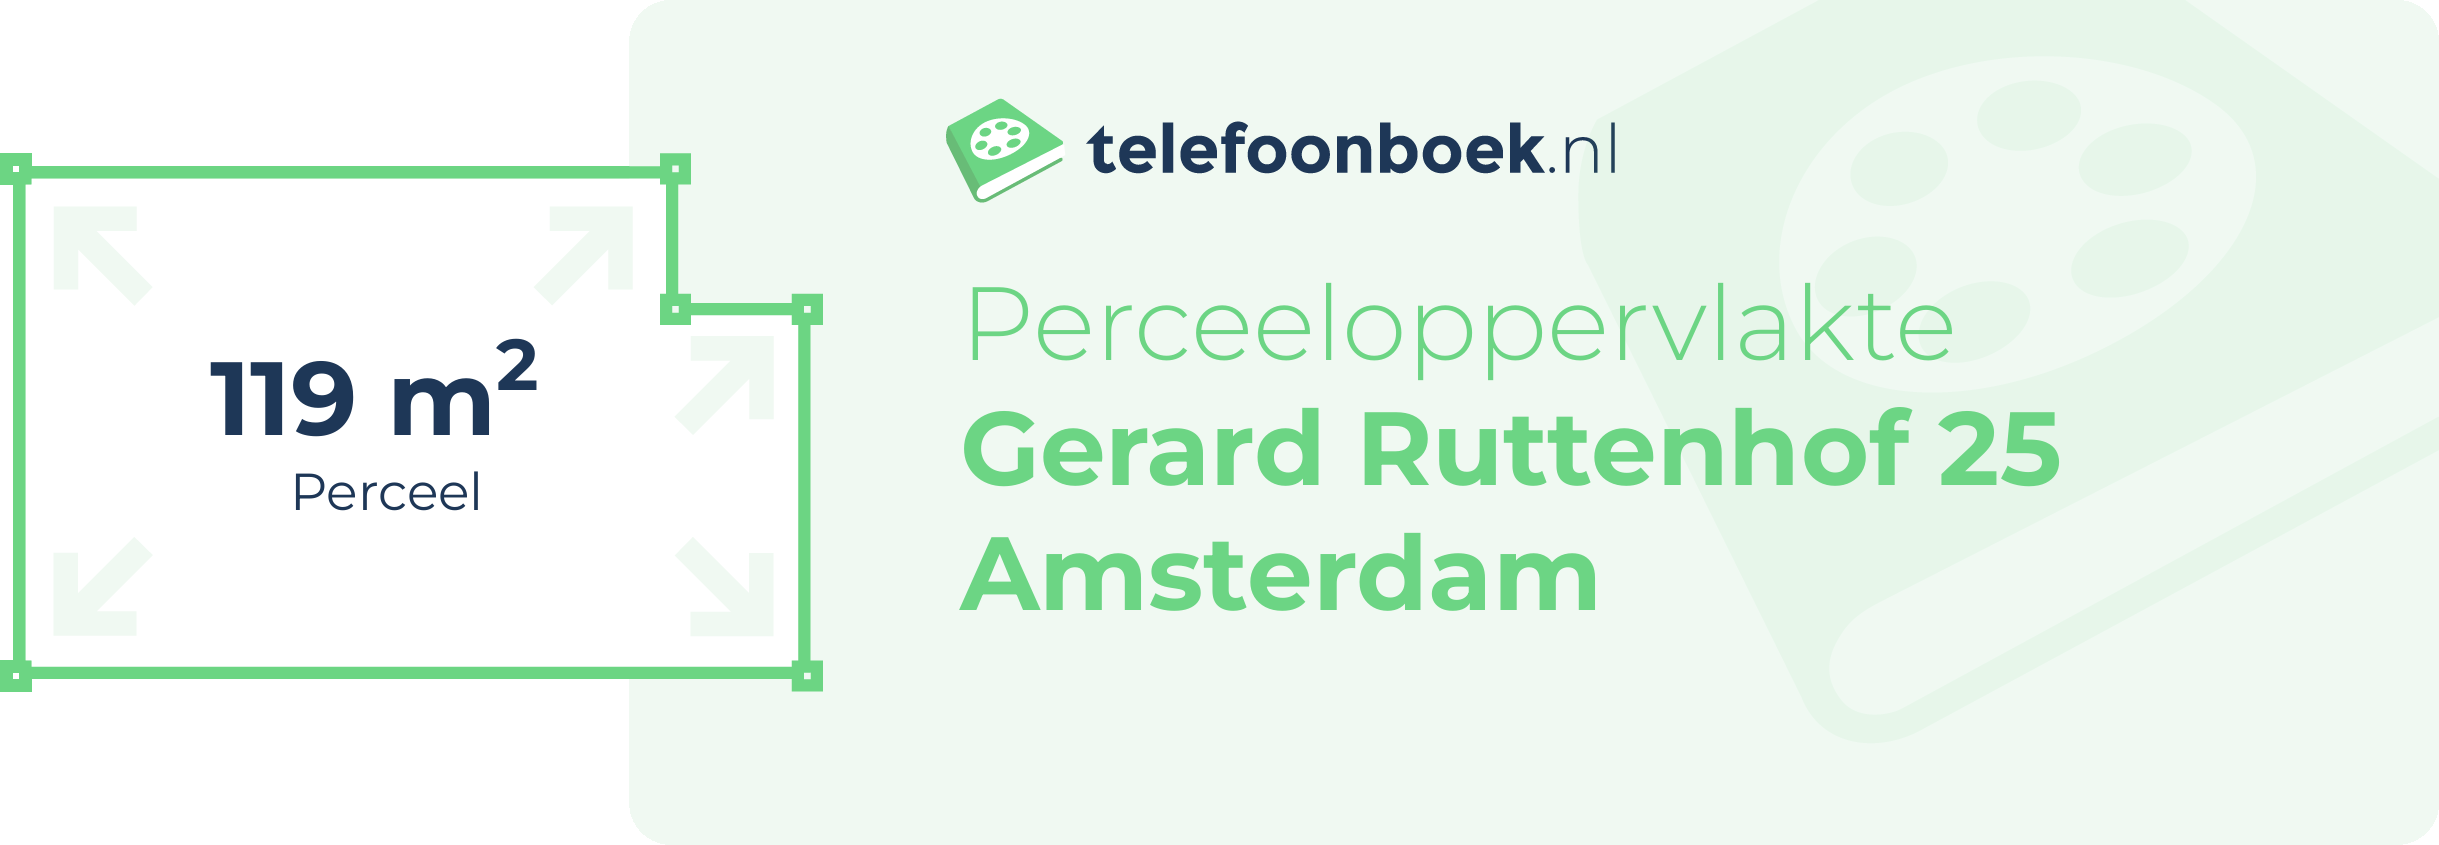 Perceeloppervlakte Gerard Ruttenhof 25 Amsterdam